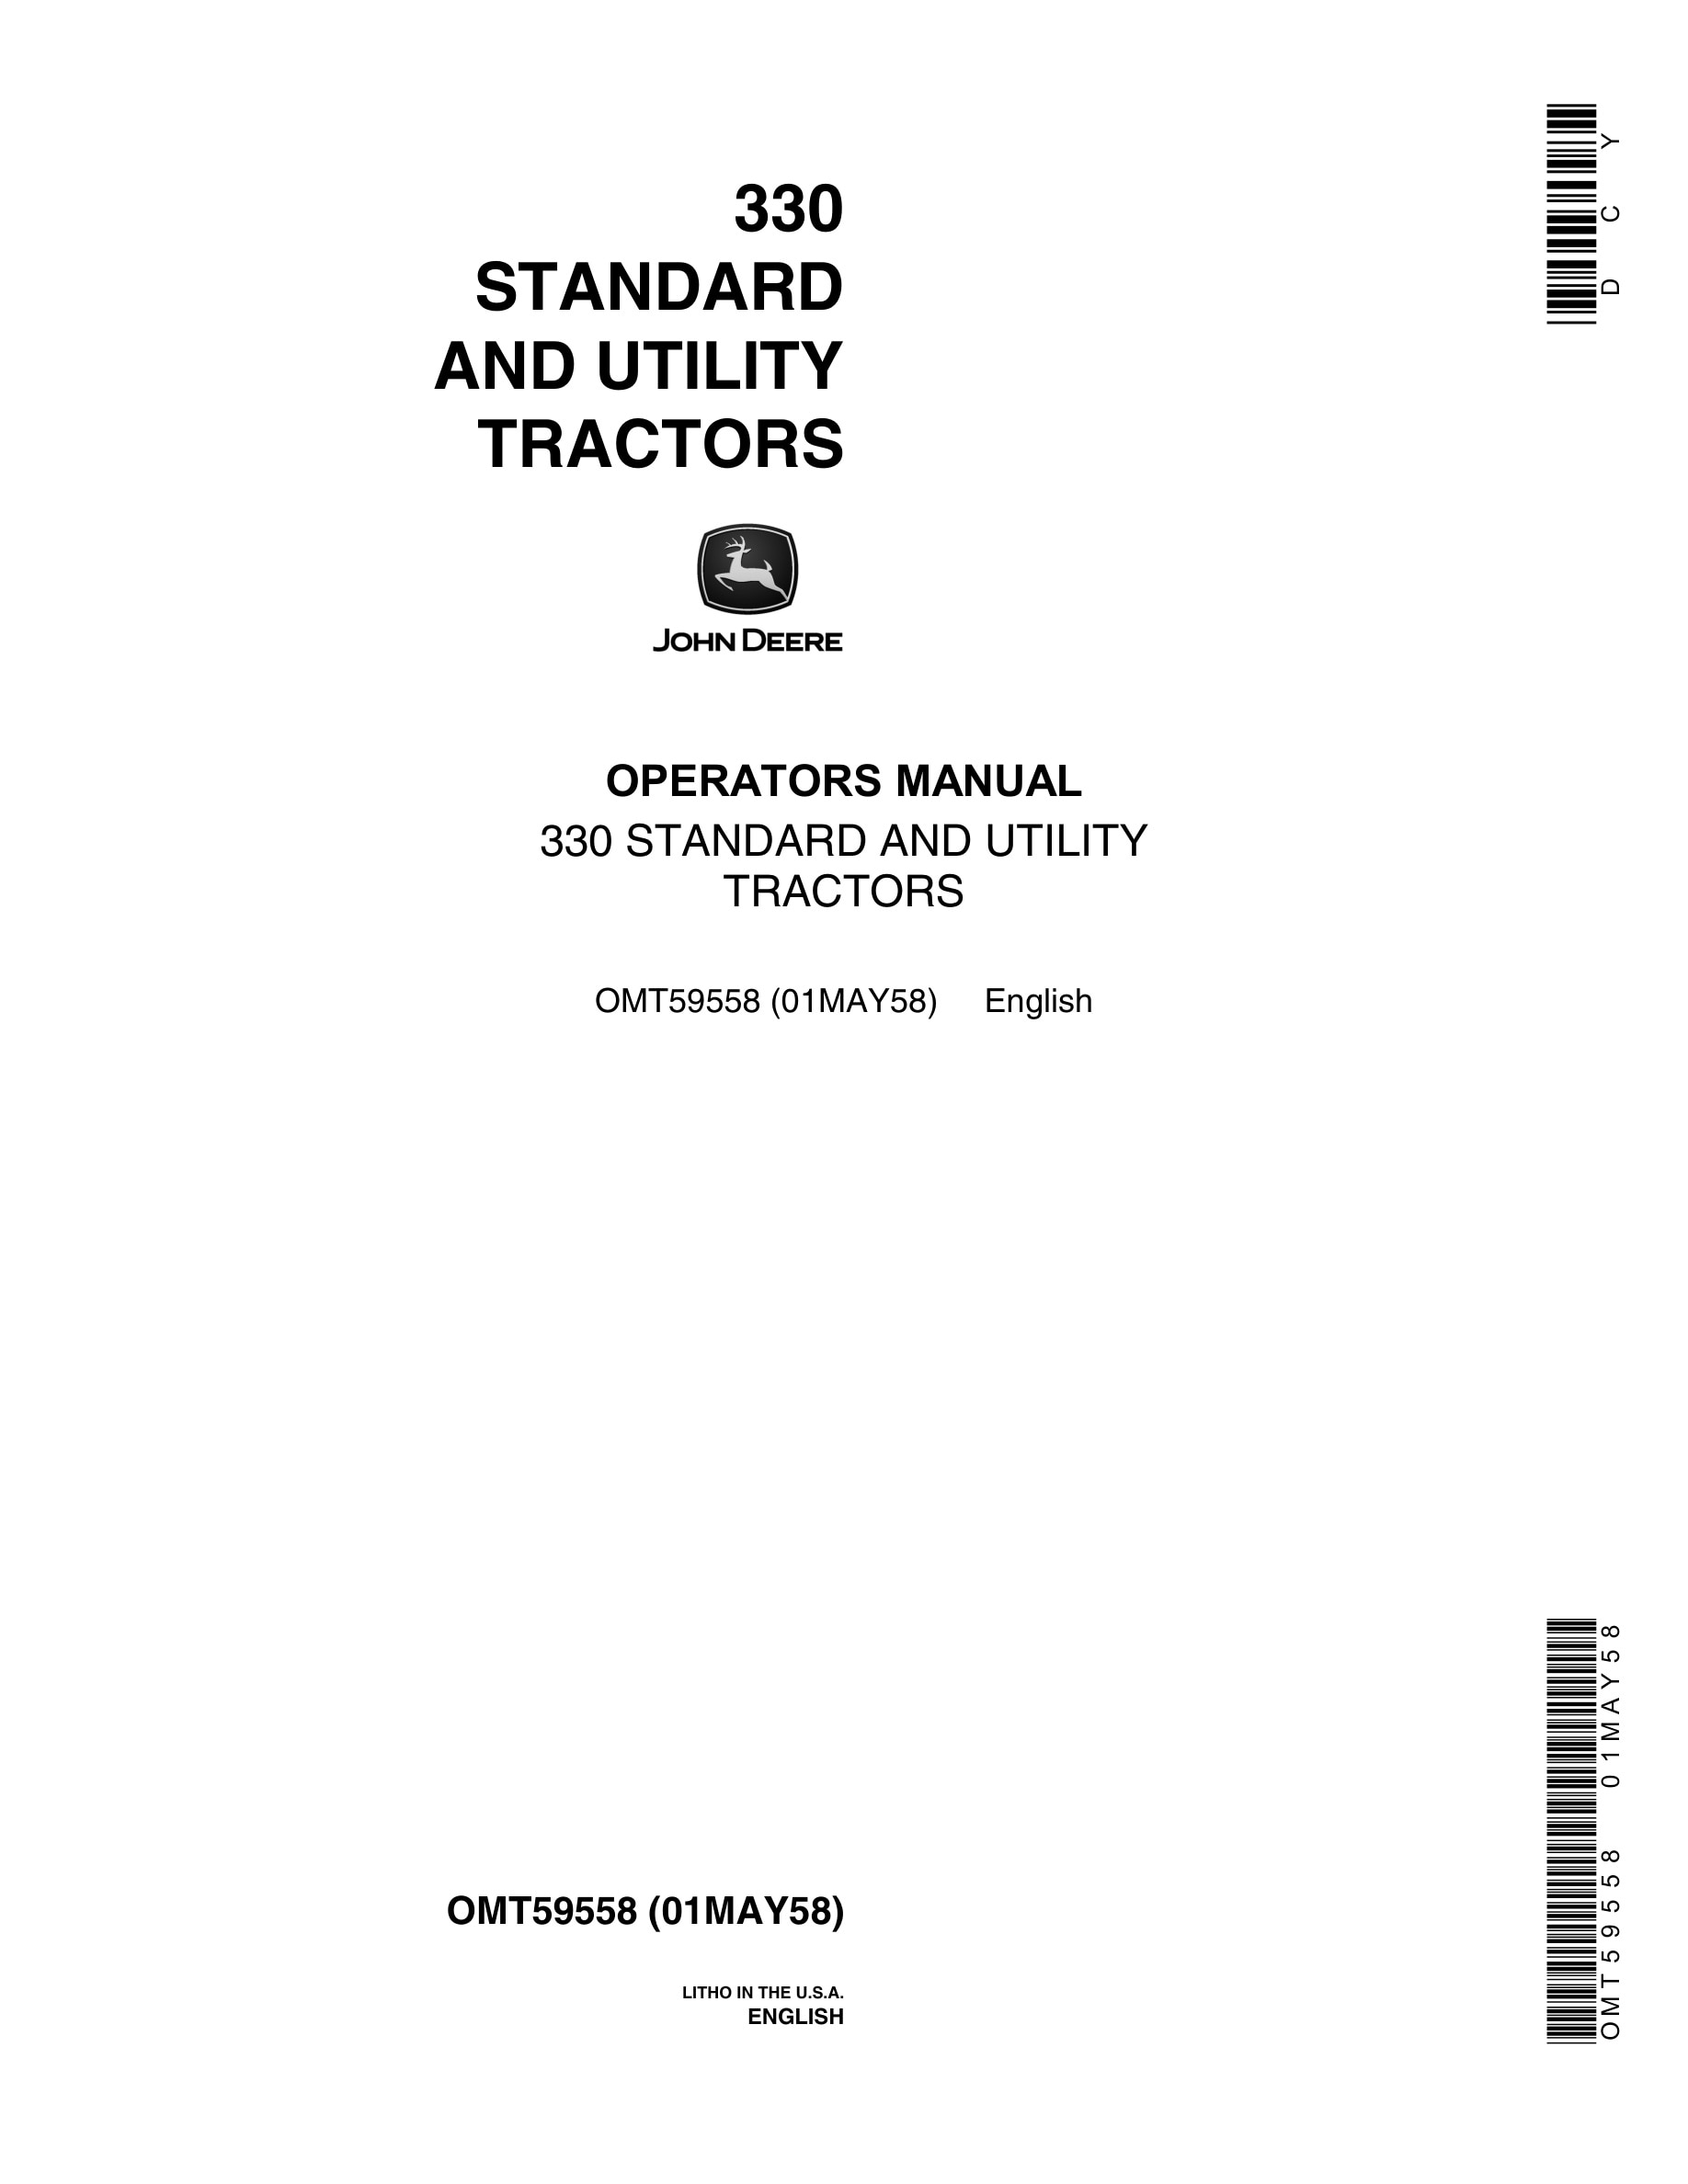 John Deere 330 Standard And Utility Tractors Operator Manuals OMT59558-1